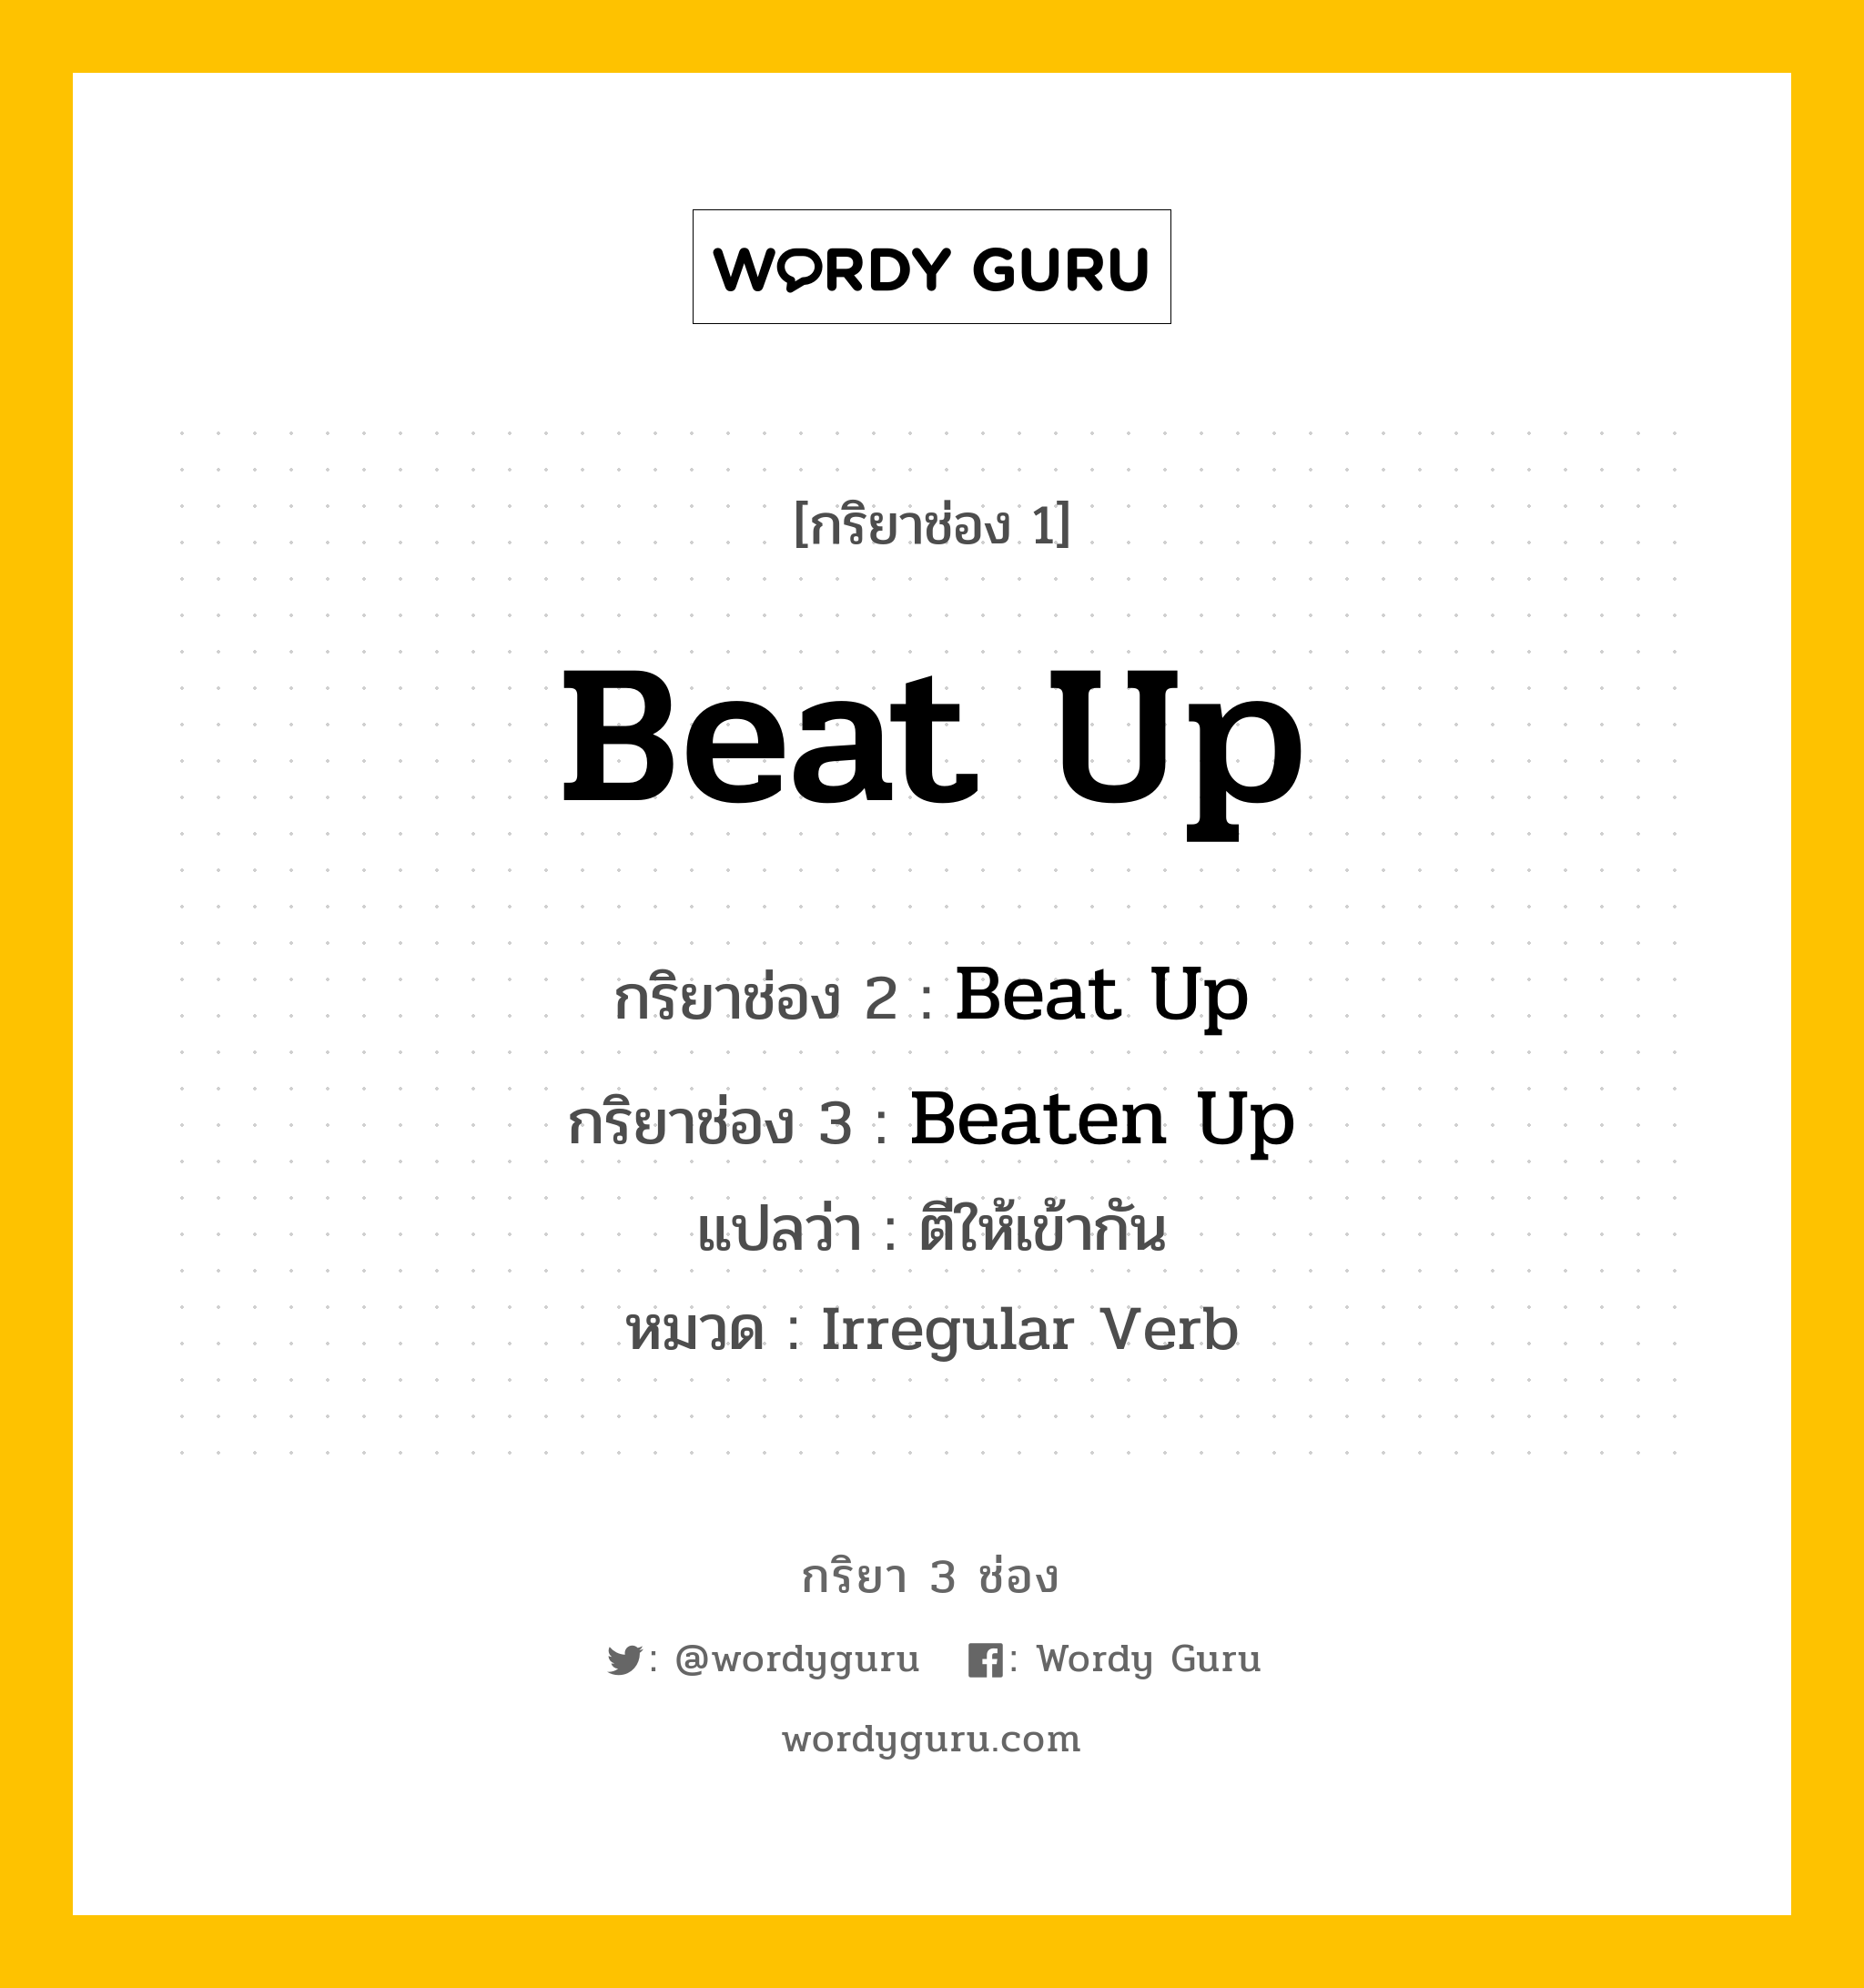 Beat Up มีกริยา 3 ช่องอะไรบ้าง? คำศัพท์ในกลุ่มประเภท Irregular Verb, กริยาช่อง 1 Beat Up กริยาช่อง 2 Beat Up กริยาช่อง 3 Beaten Up แปลว่า ตีให้เข้ากัน หมวด Irregular Verb หมวด Irregular Verb